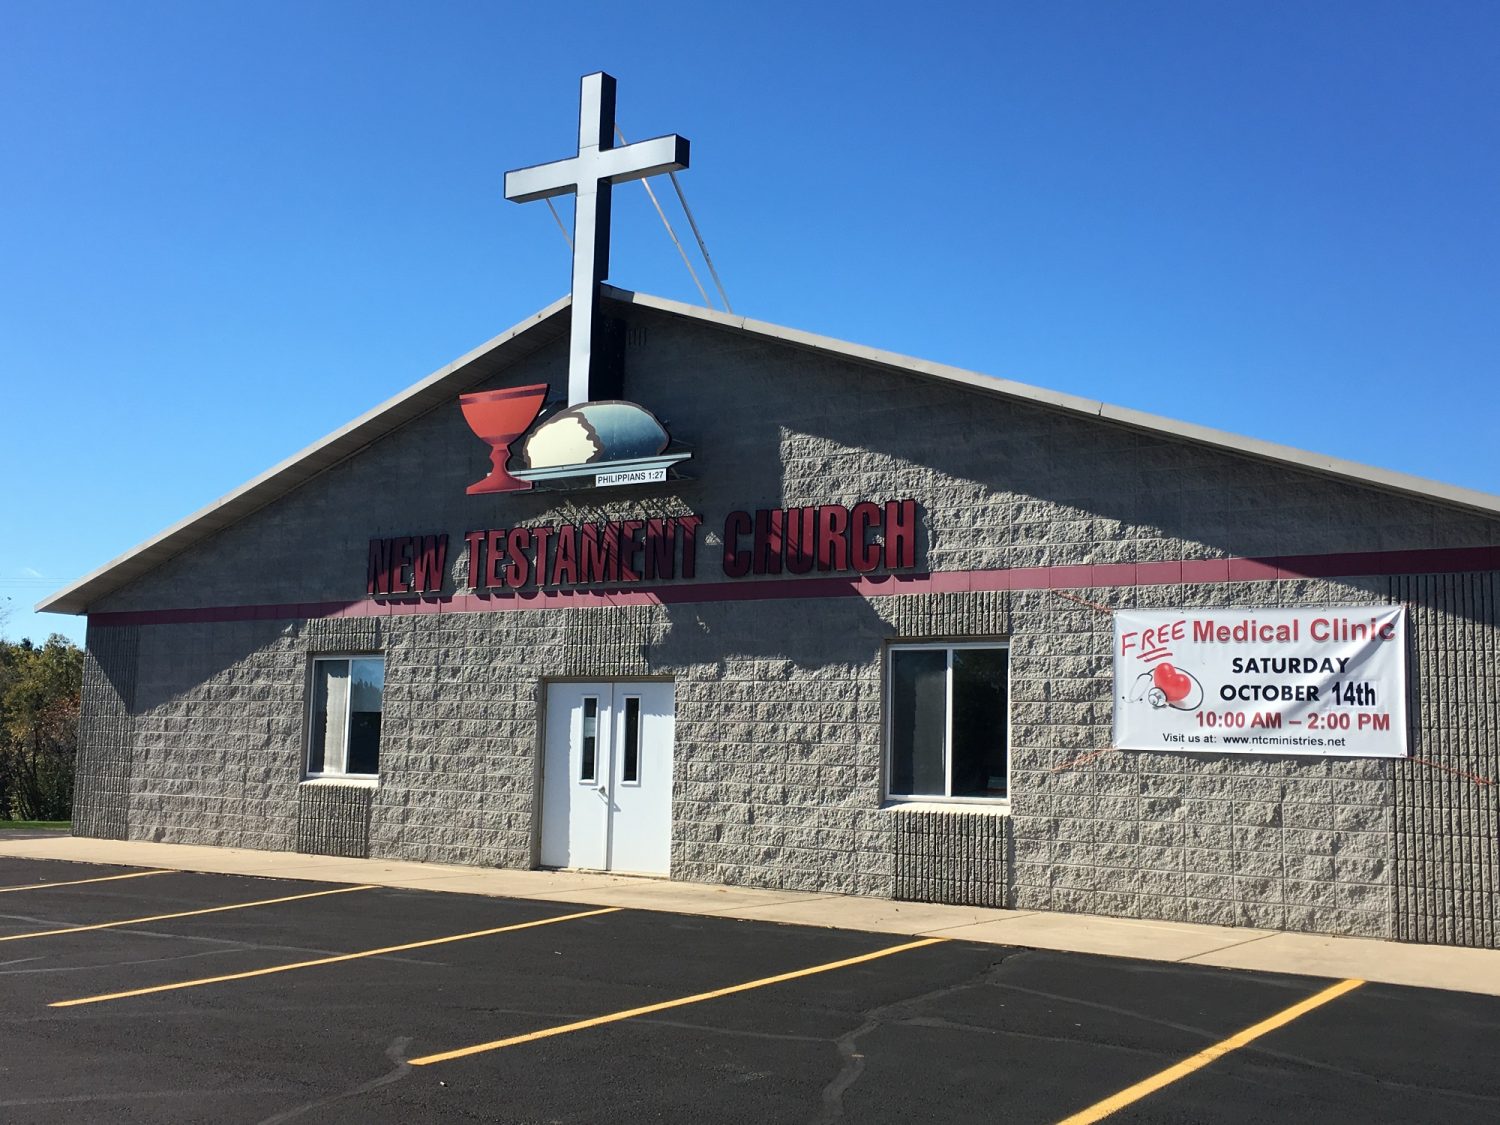 New Testament Church invites area children to VBS